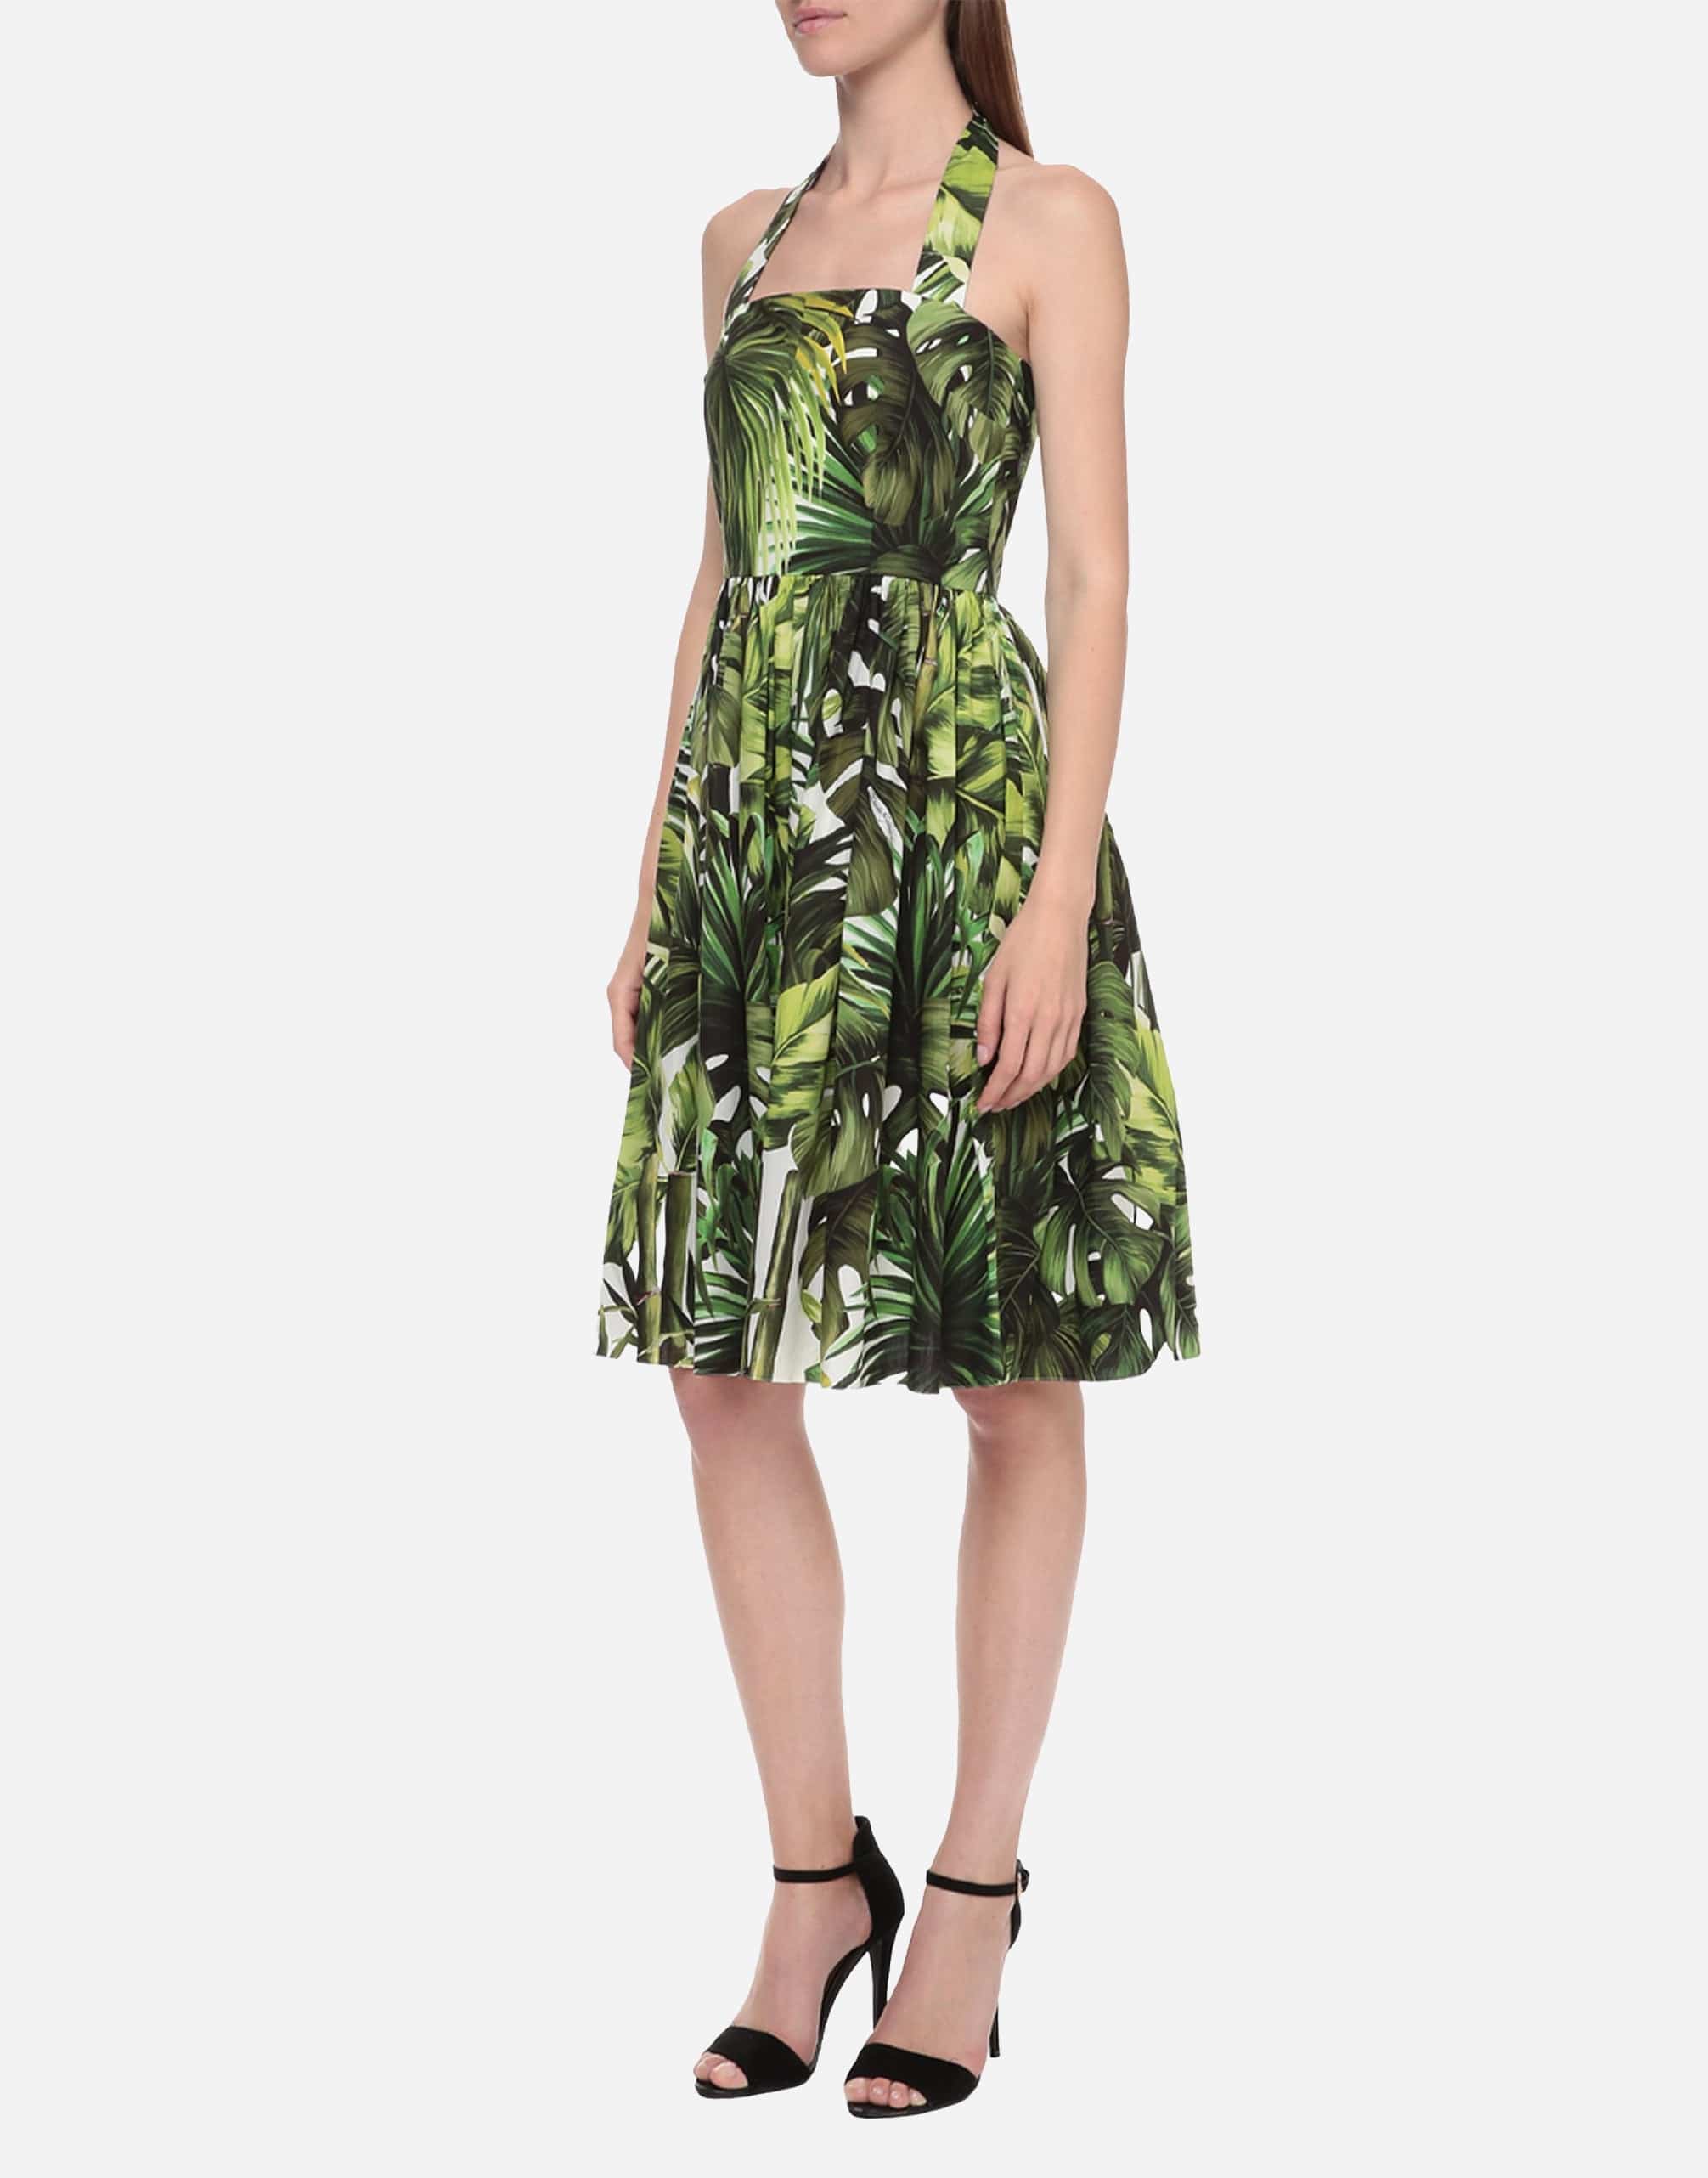 Jungle Print Halter Dress